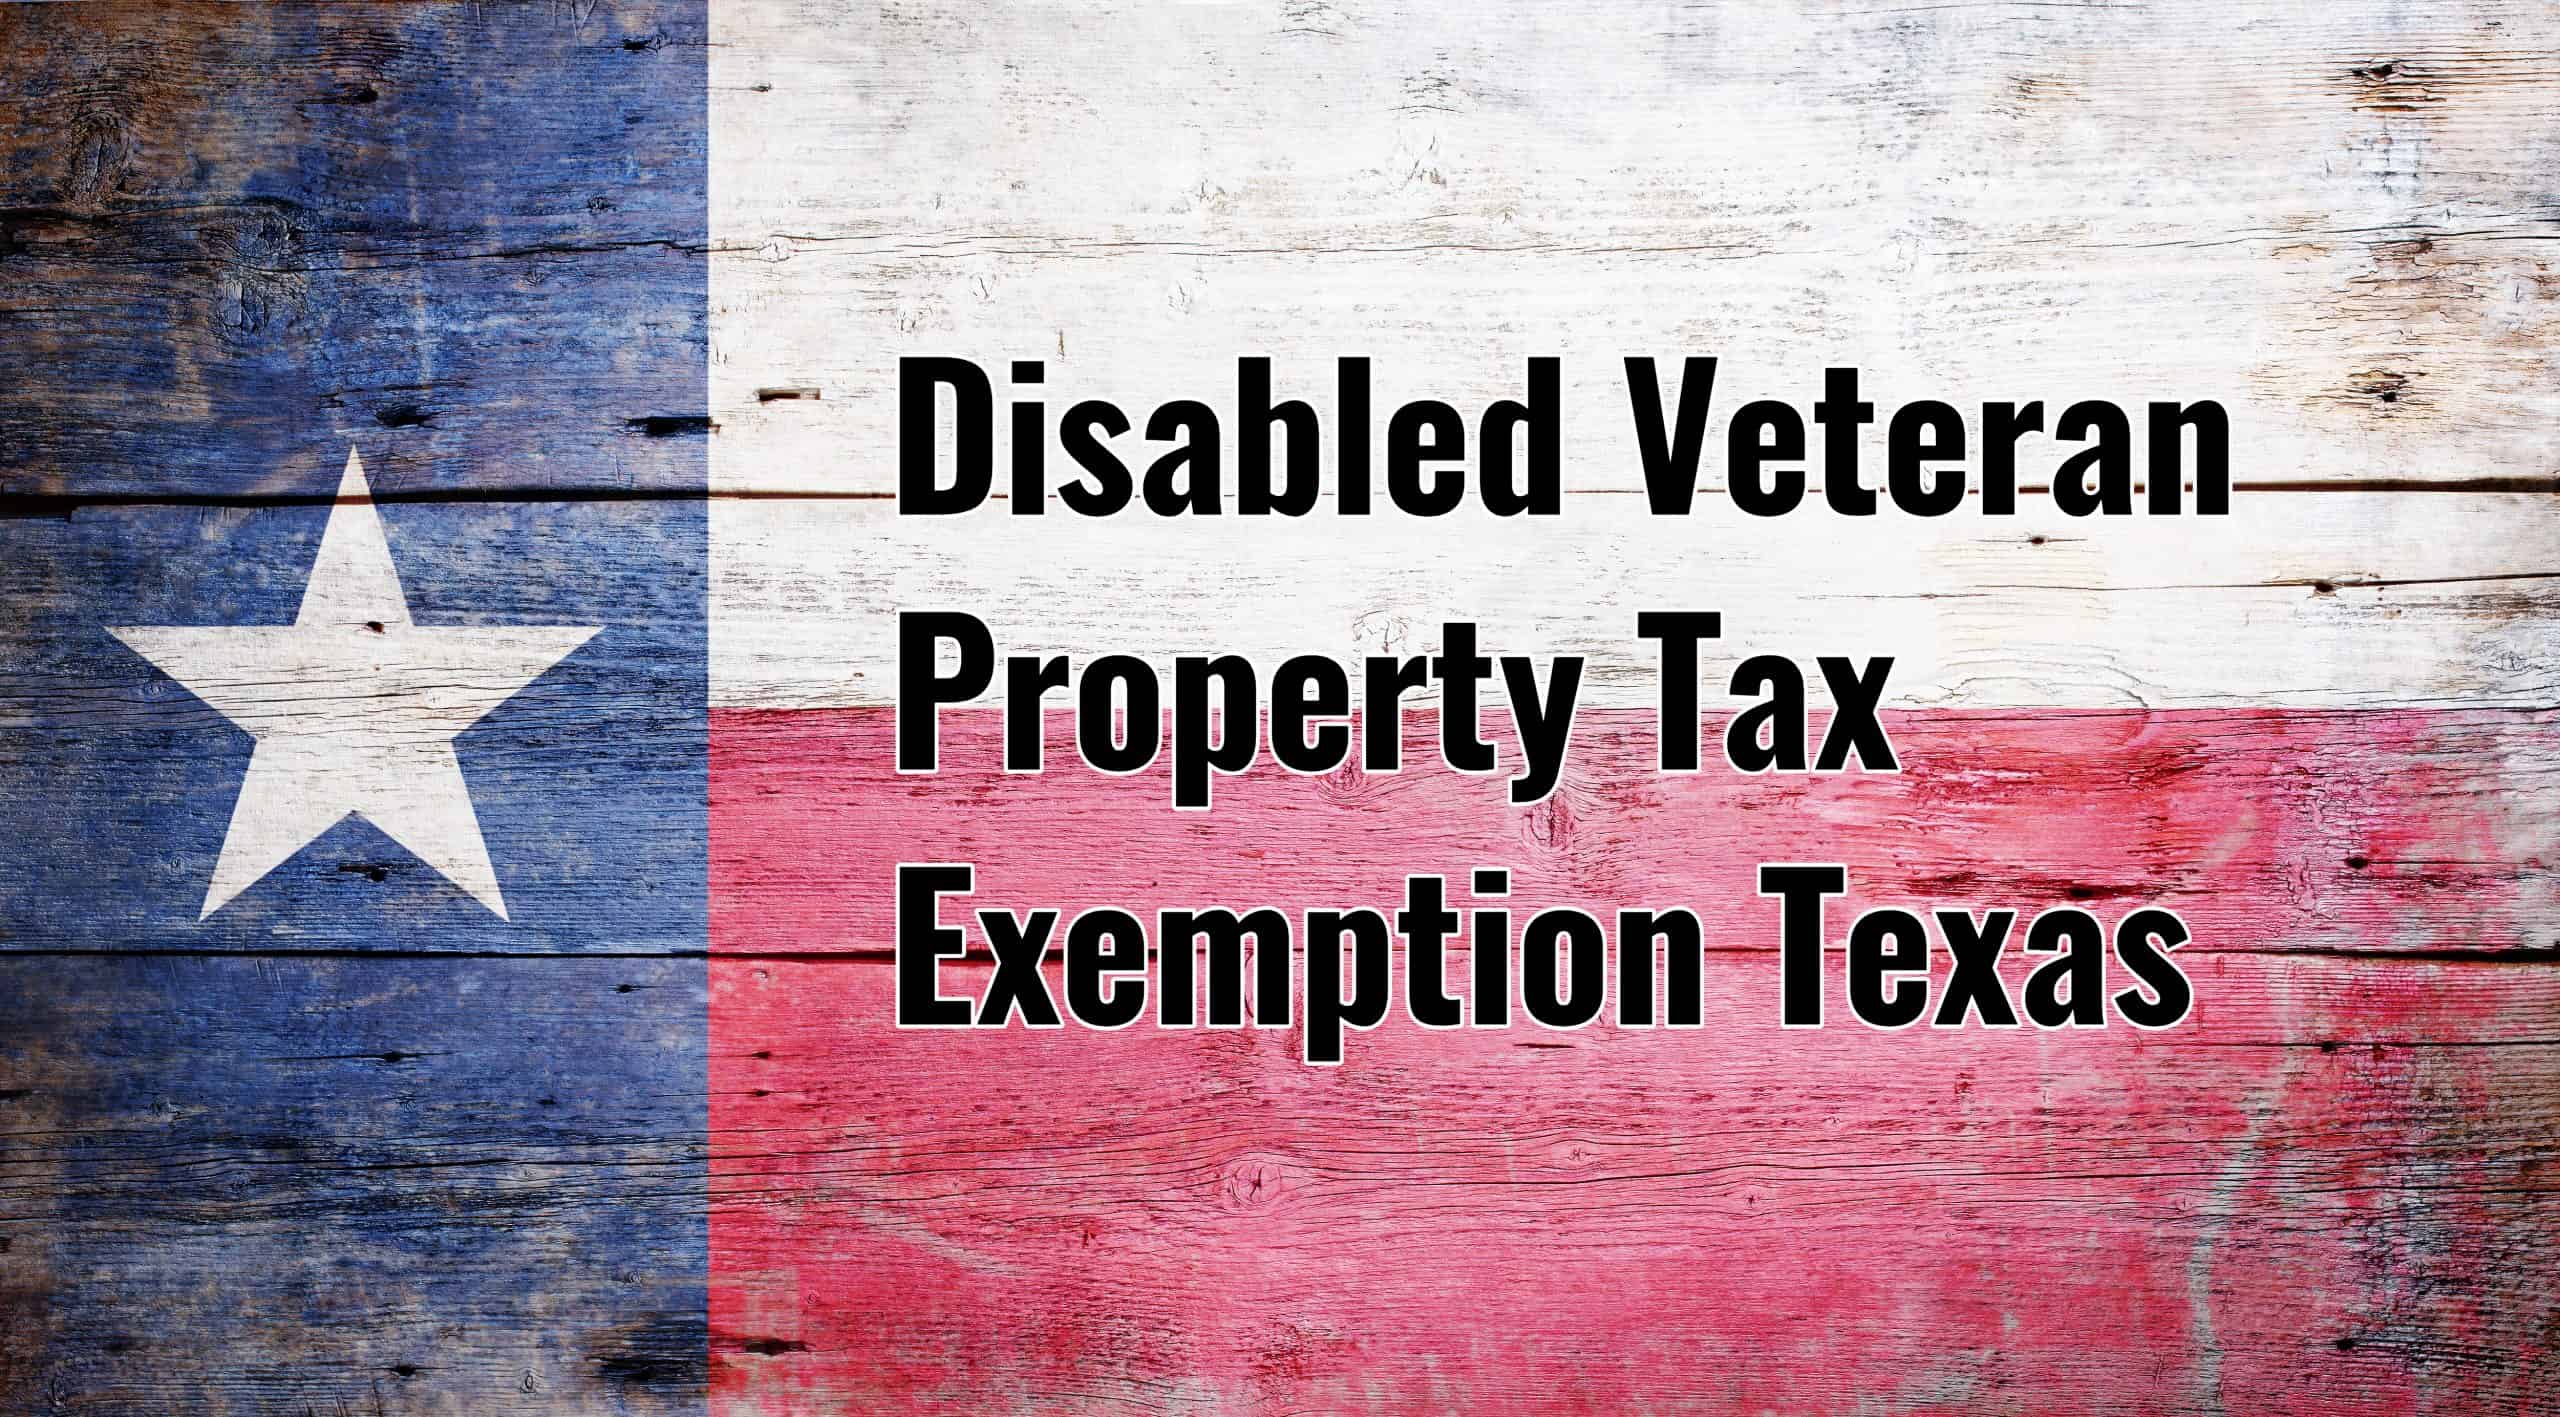 Disabled Veteran Property Tax Exemption Texas